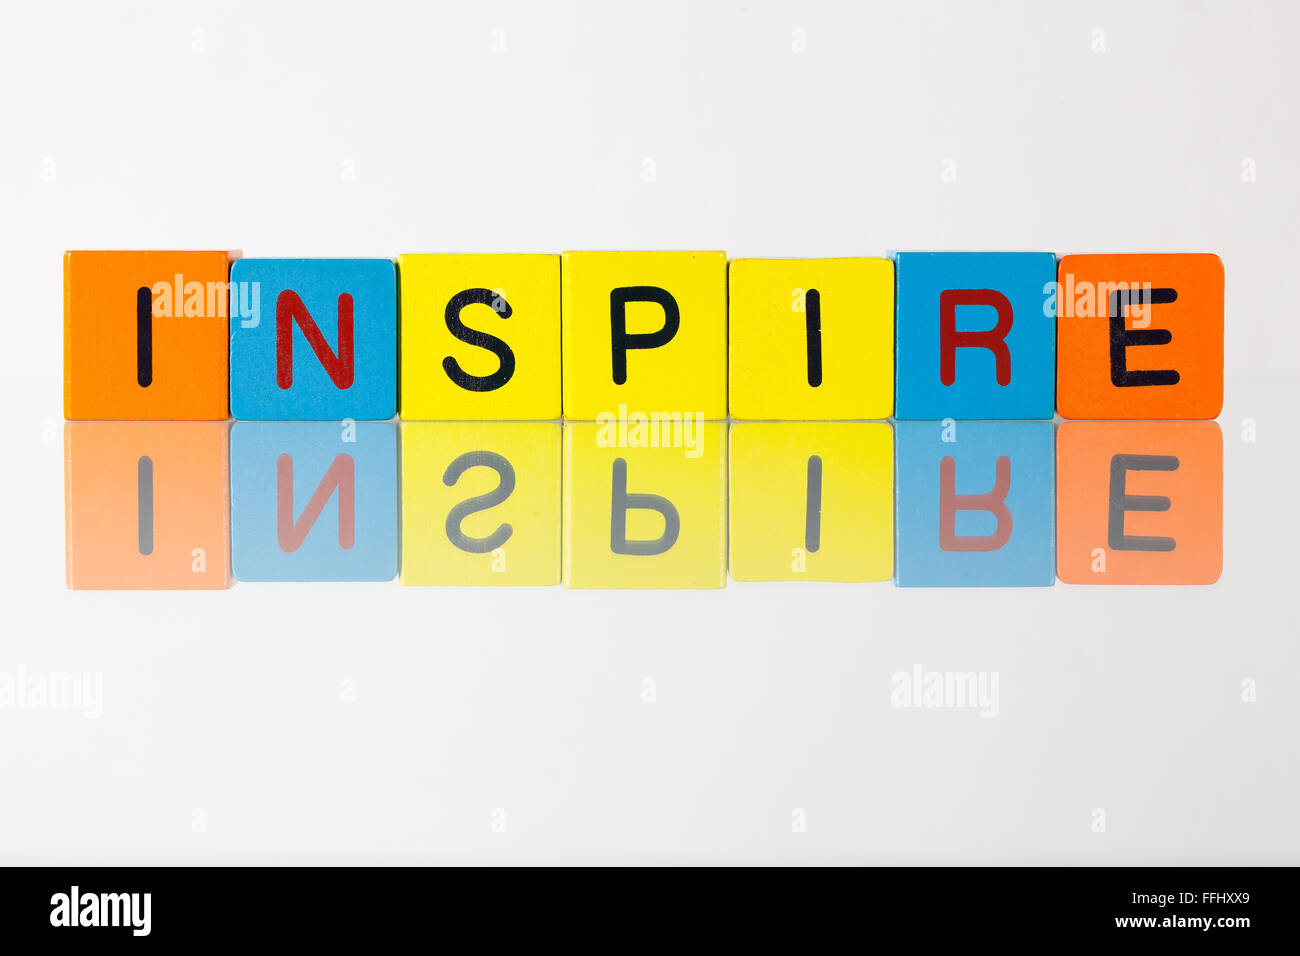 Inspire - an inscription from children's wooden blocks Stock Photo